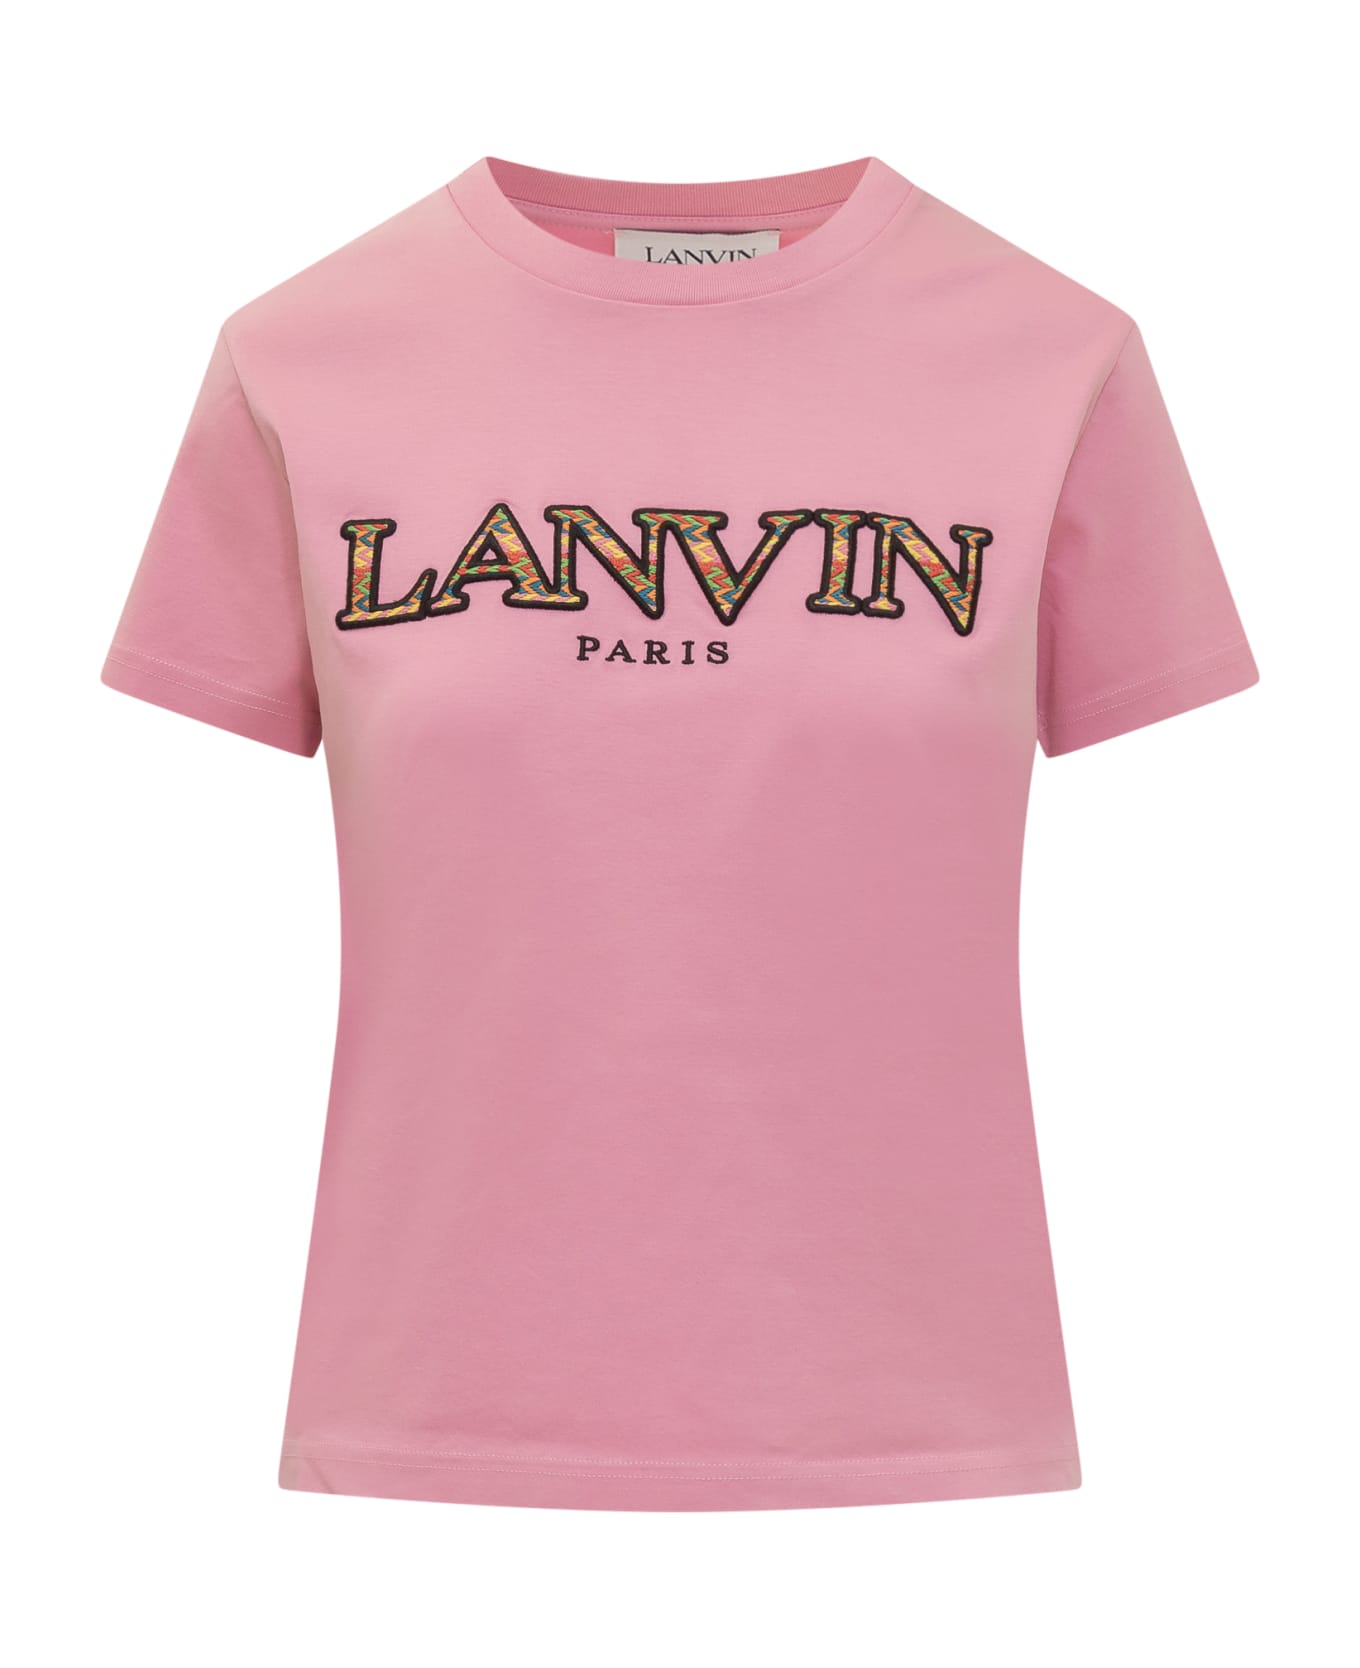 Lanvin Curb T-shirt - Peony Pink